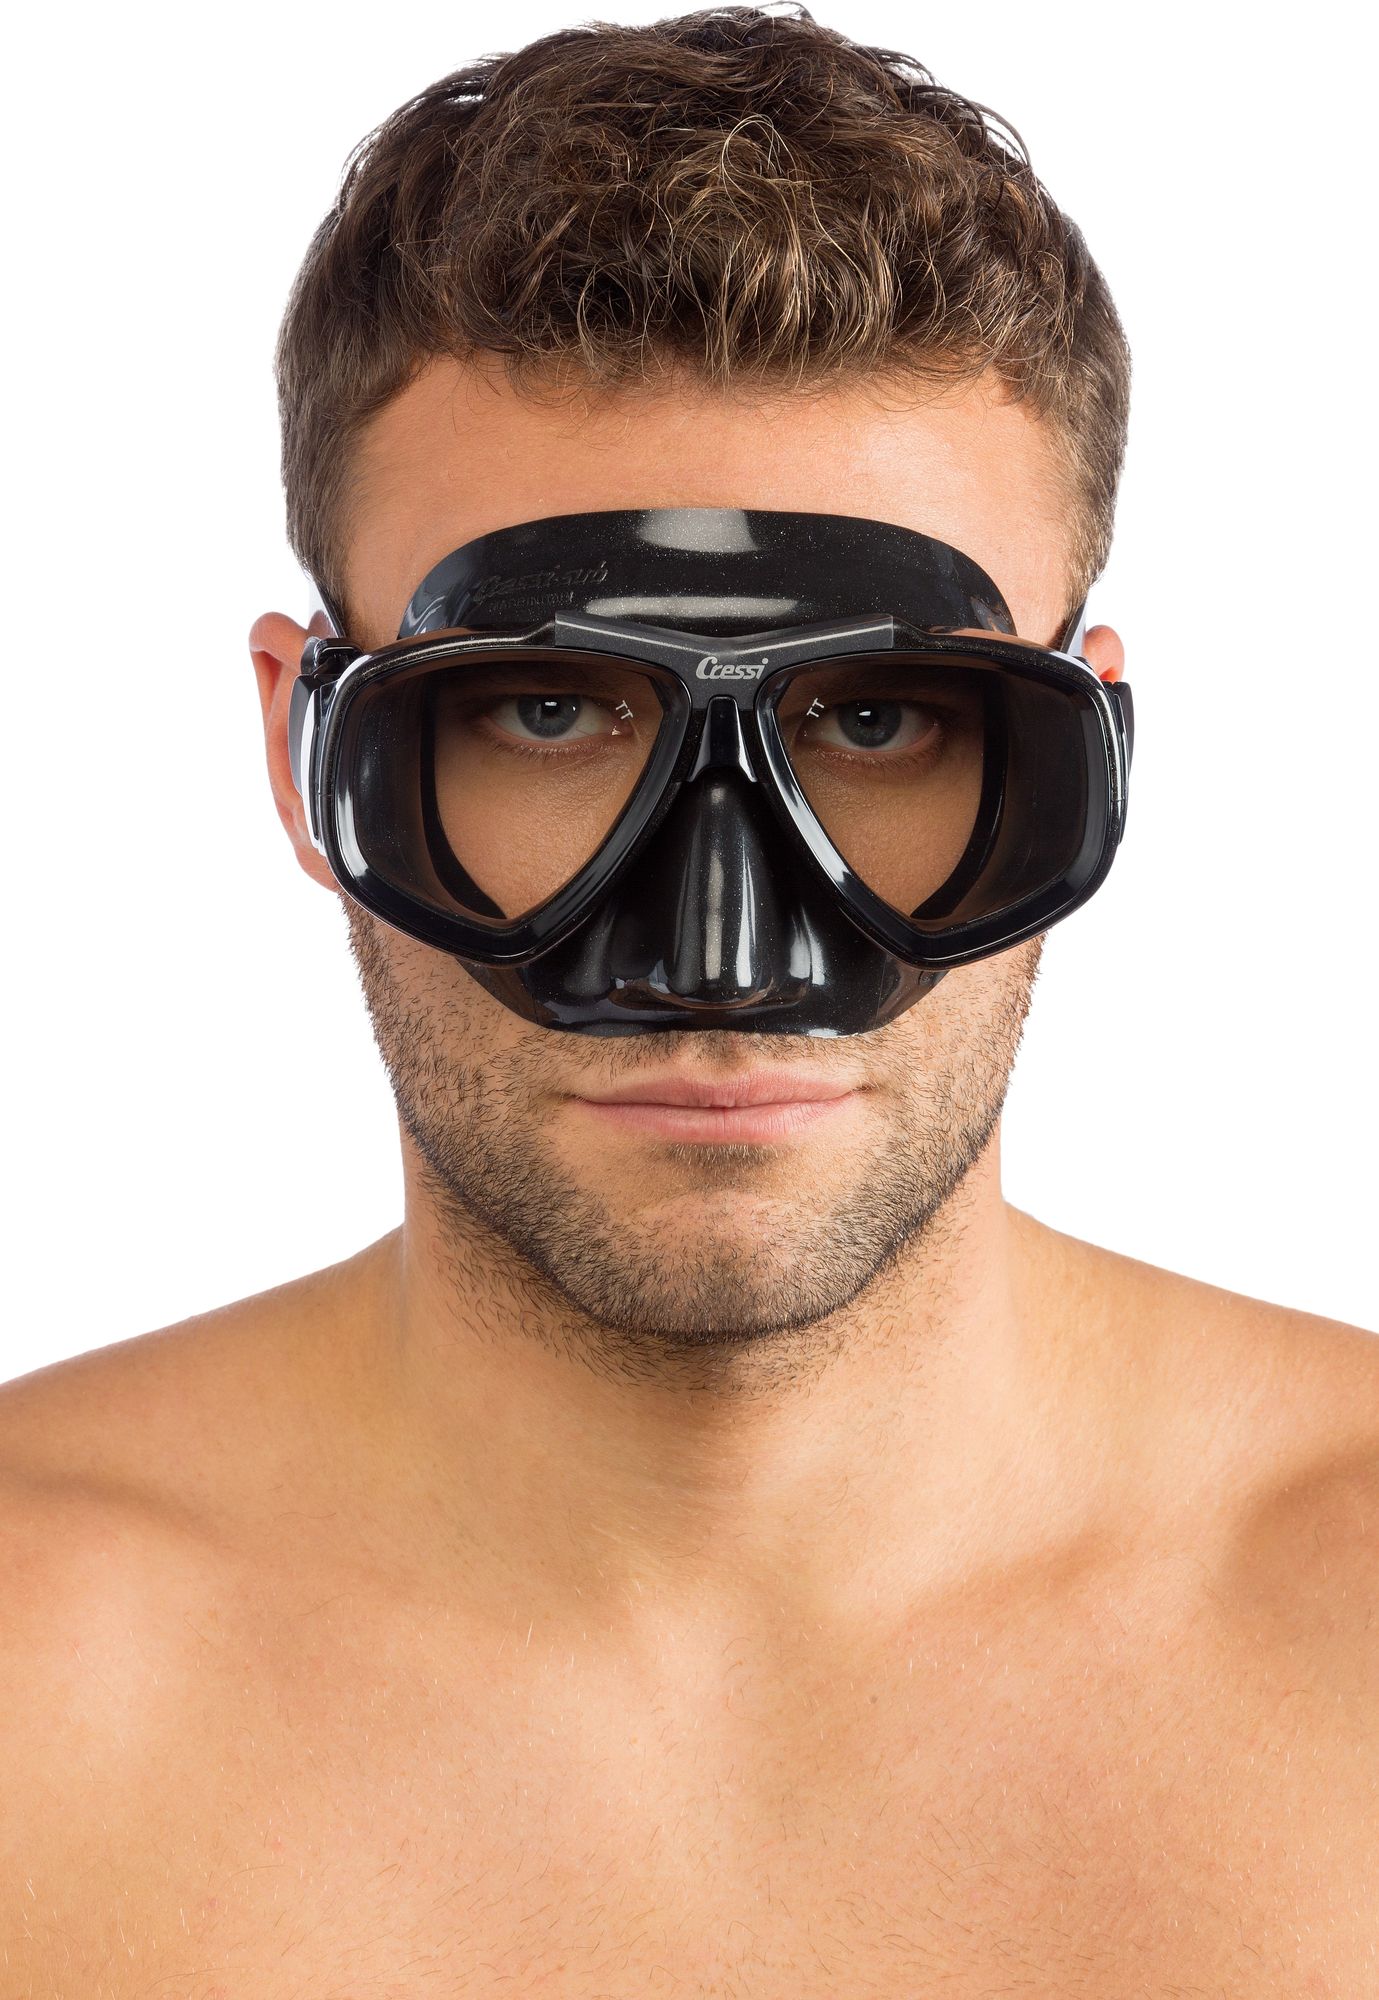 Focus Mask - Scuba mask, Snorkelling mask